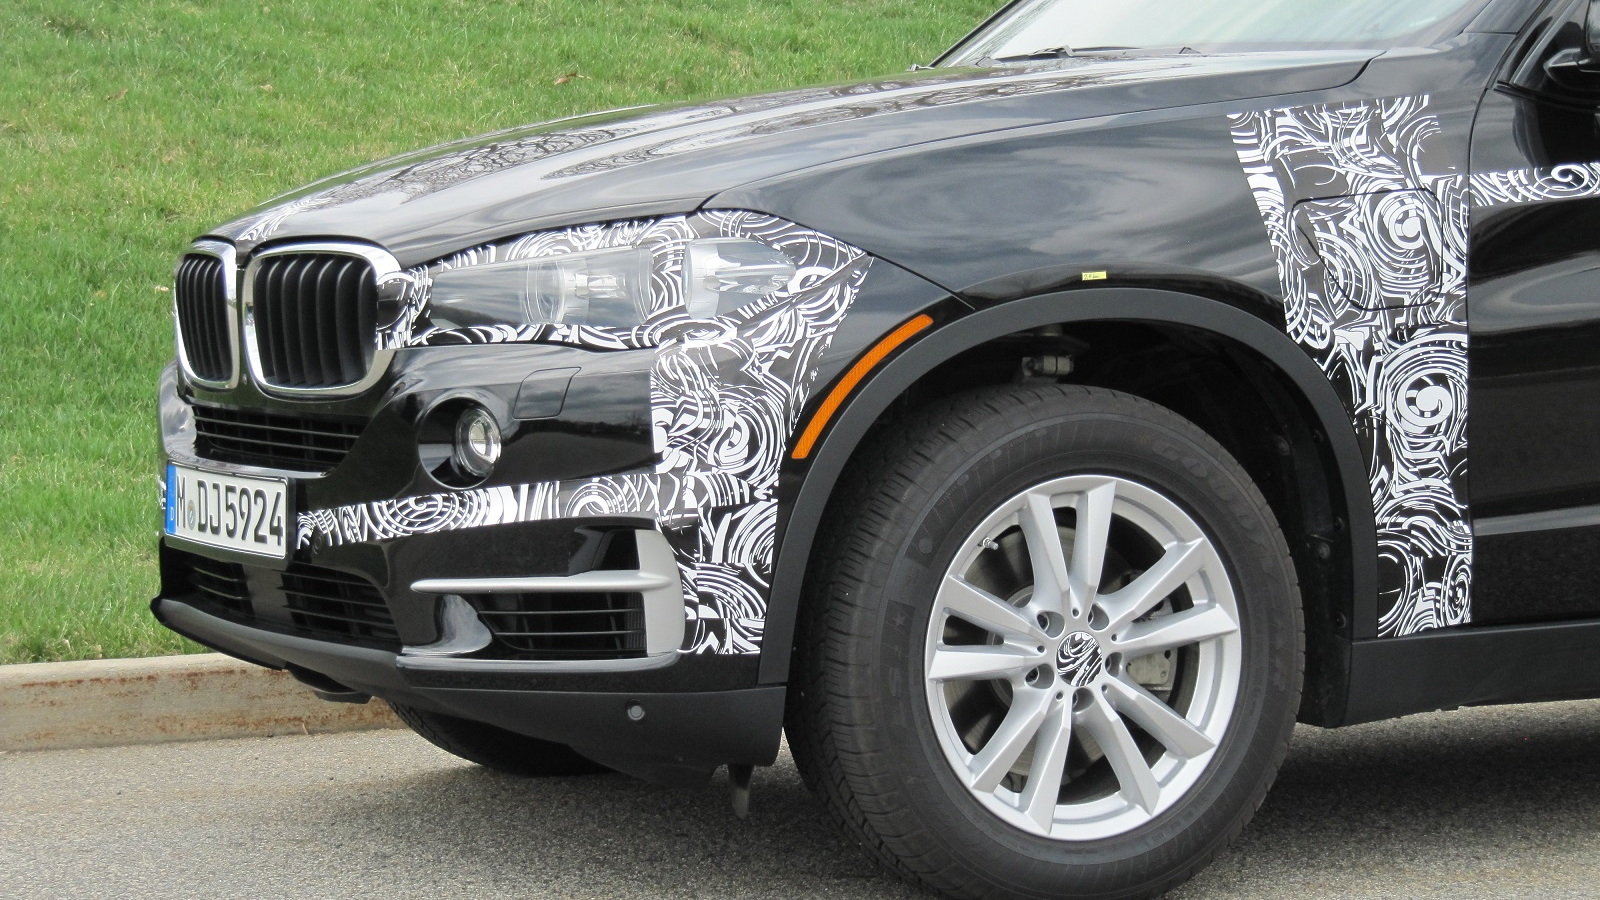 BMW X5 e-Drive plug-in hybrid prototype, test drive, Woodcliff Lake, NJ, April 2014